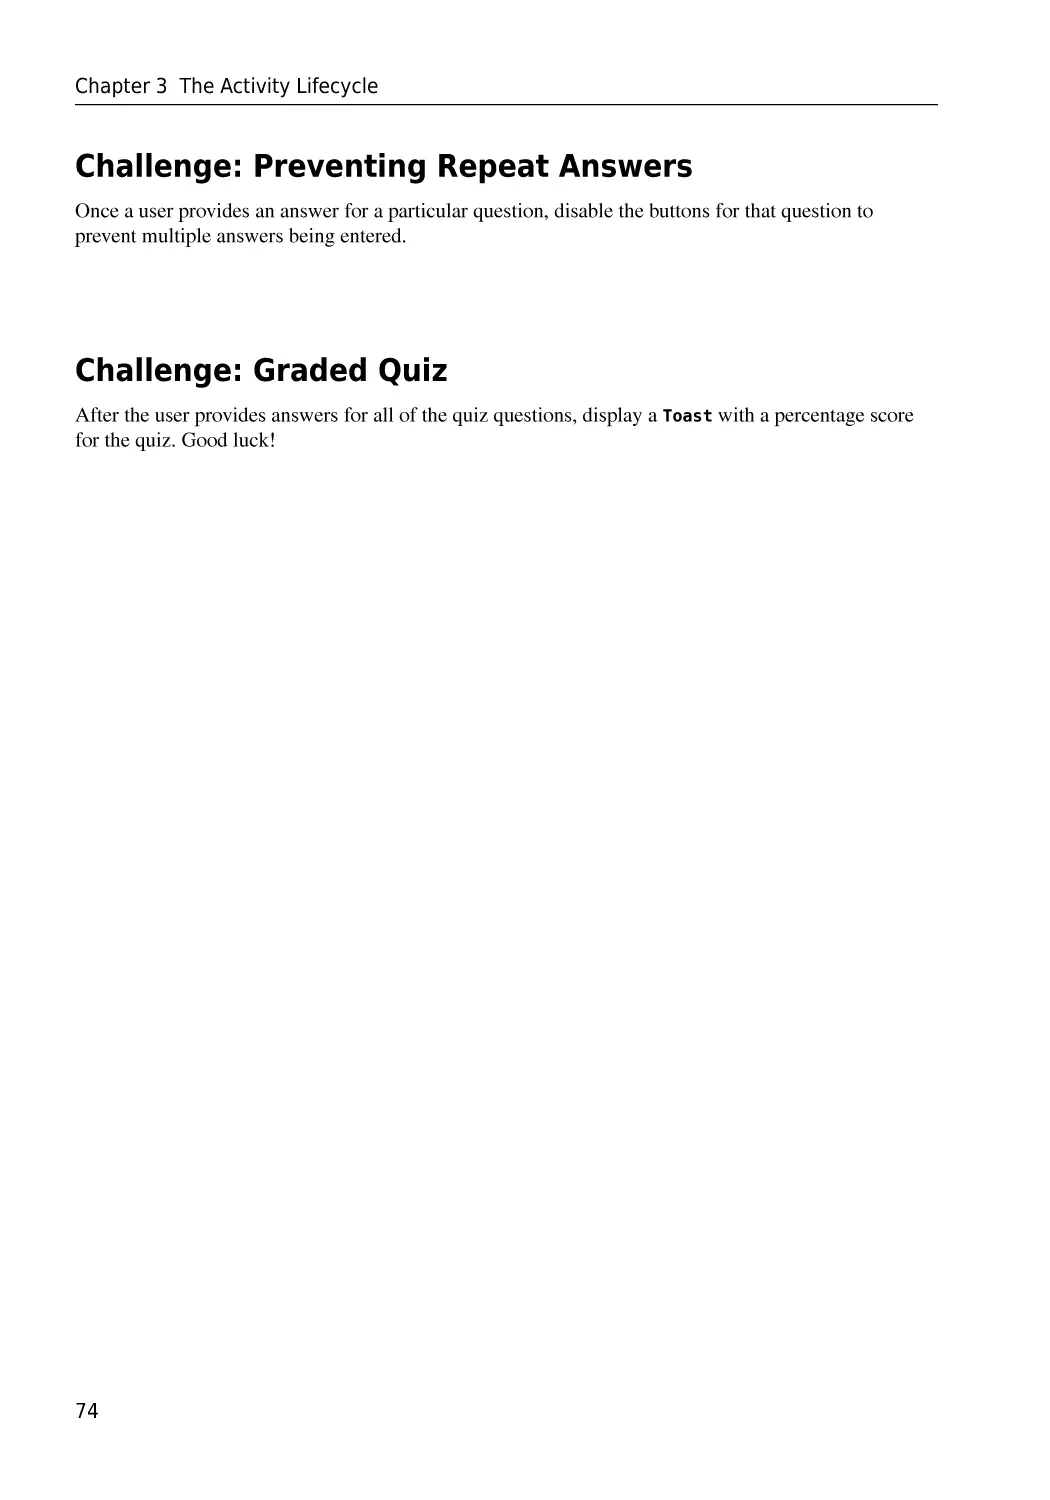 Challenge
Challenge